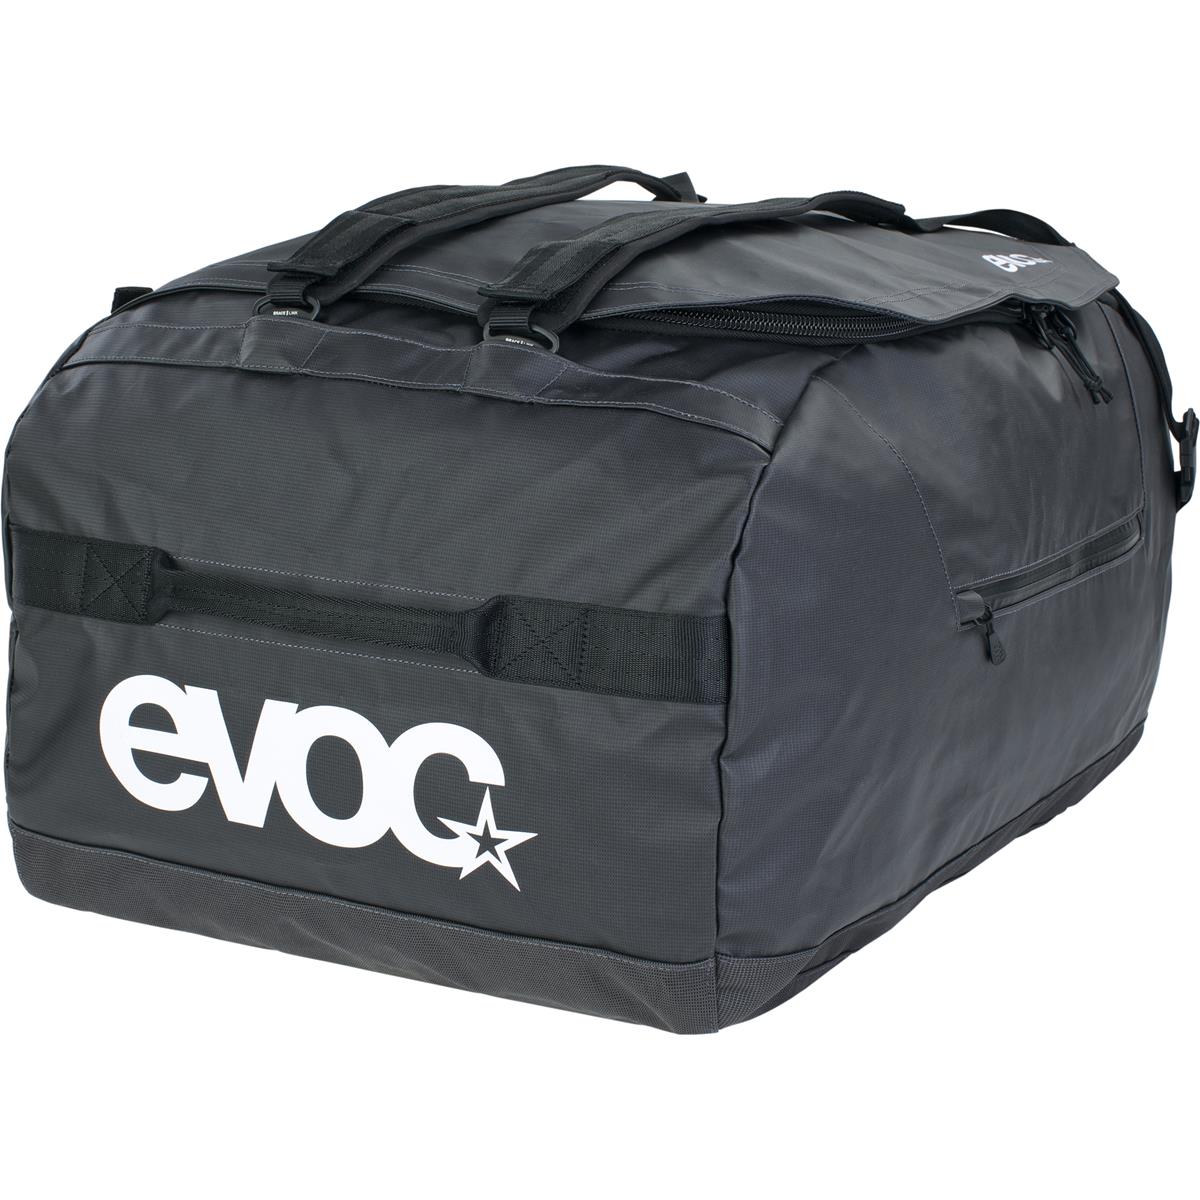 Evoc Sac de sport Duffel Bag 100 Carbon Gris/Noir